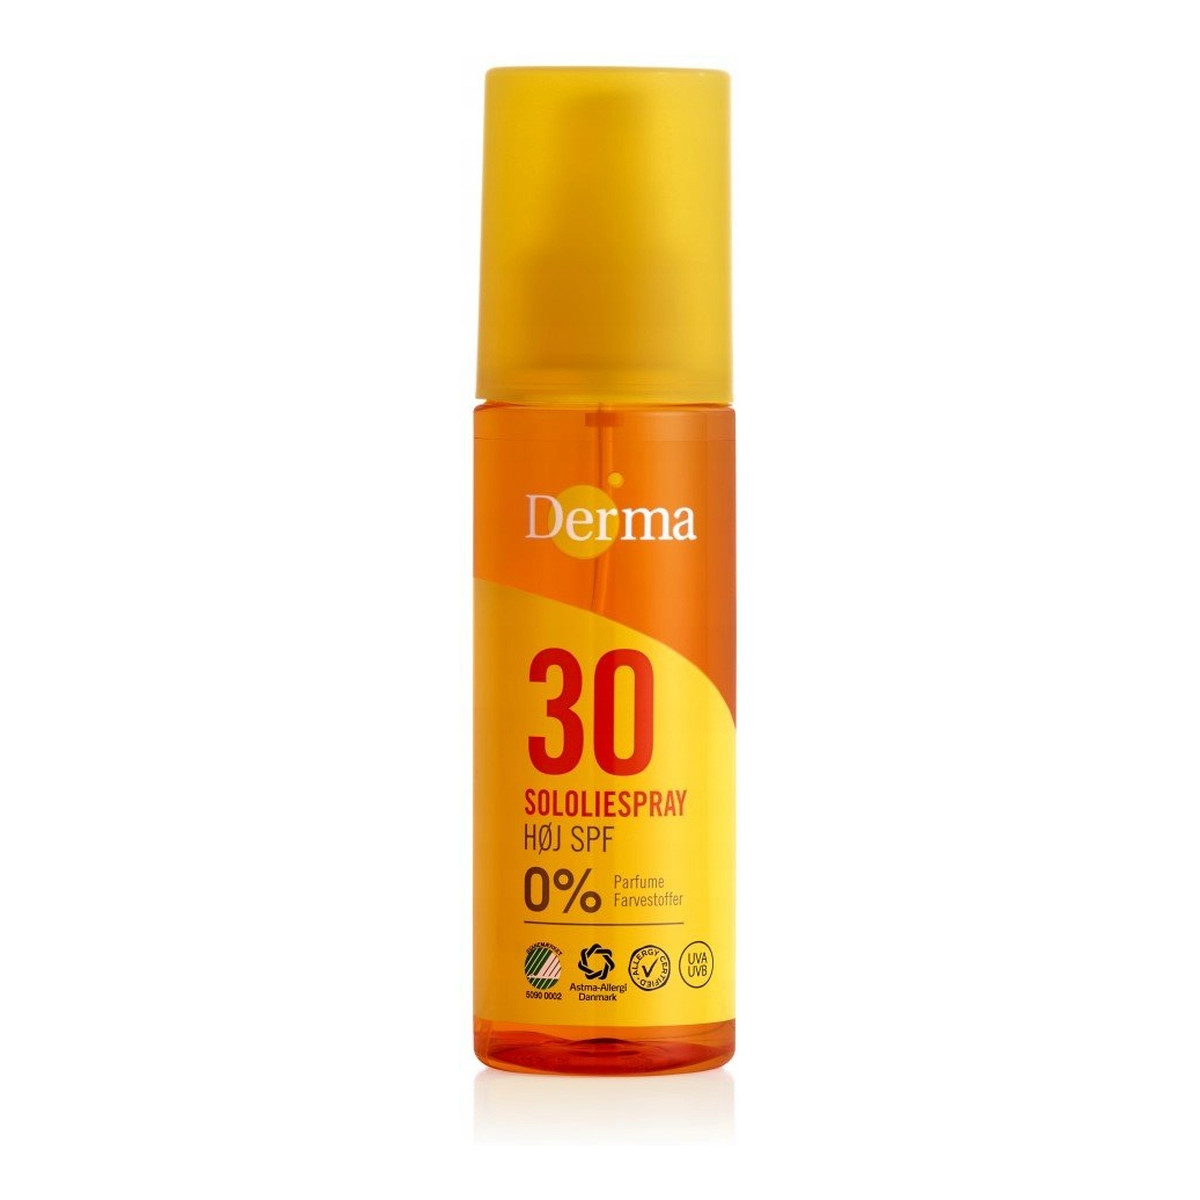 Derma Sun Solstift SPF30 olejek słoneczny 150ml